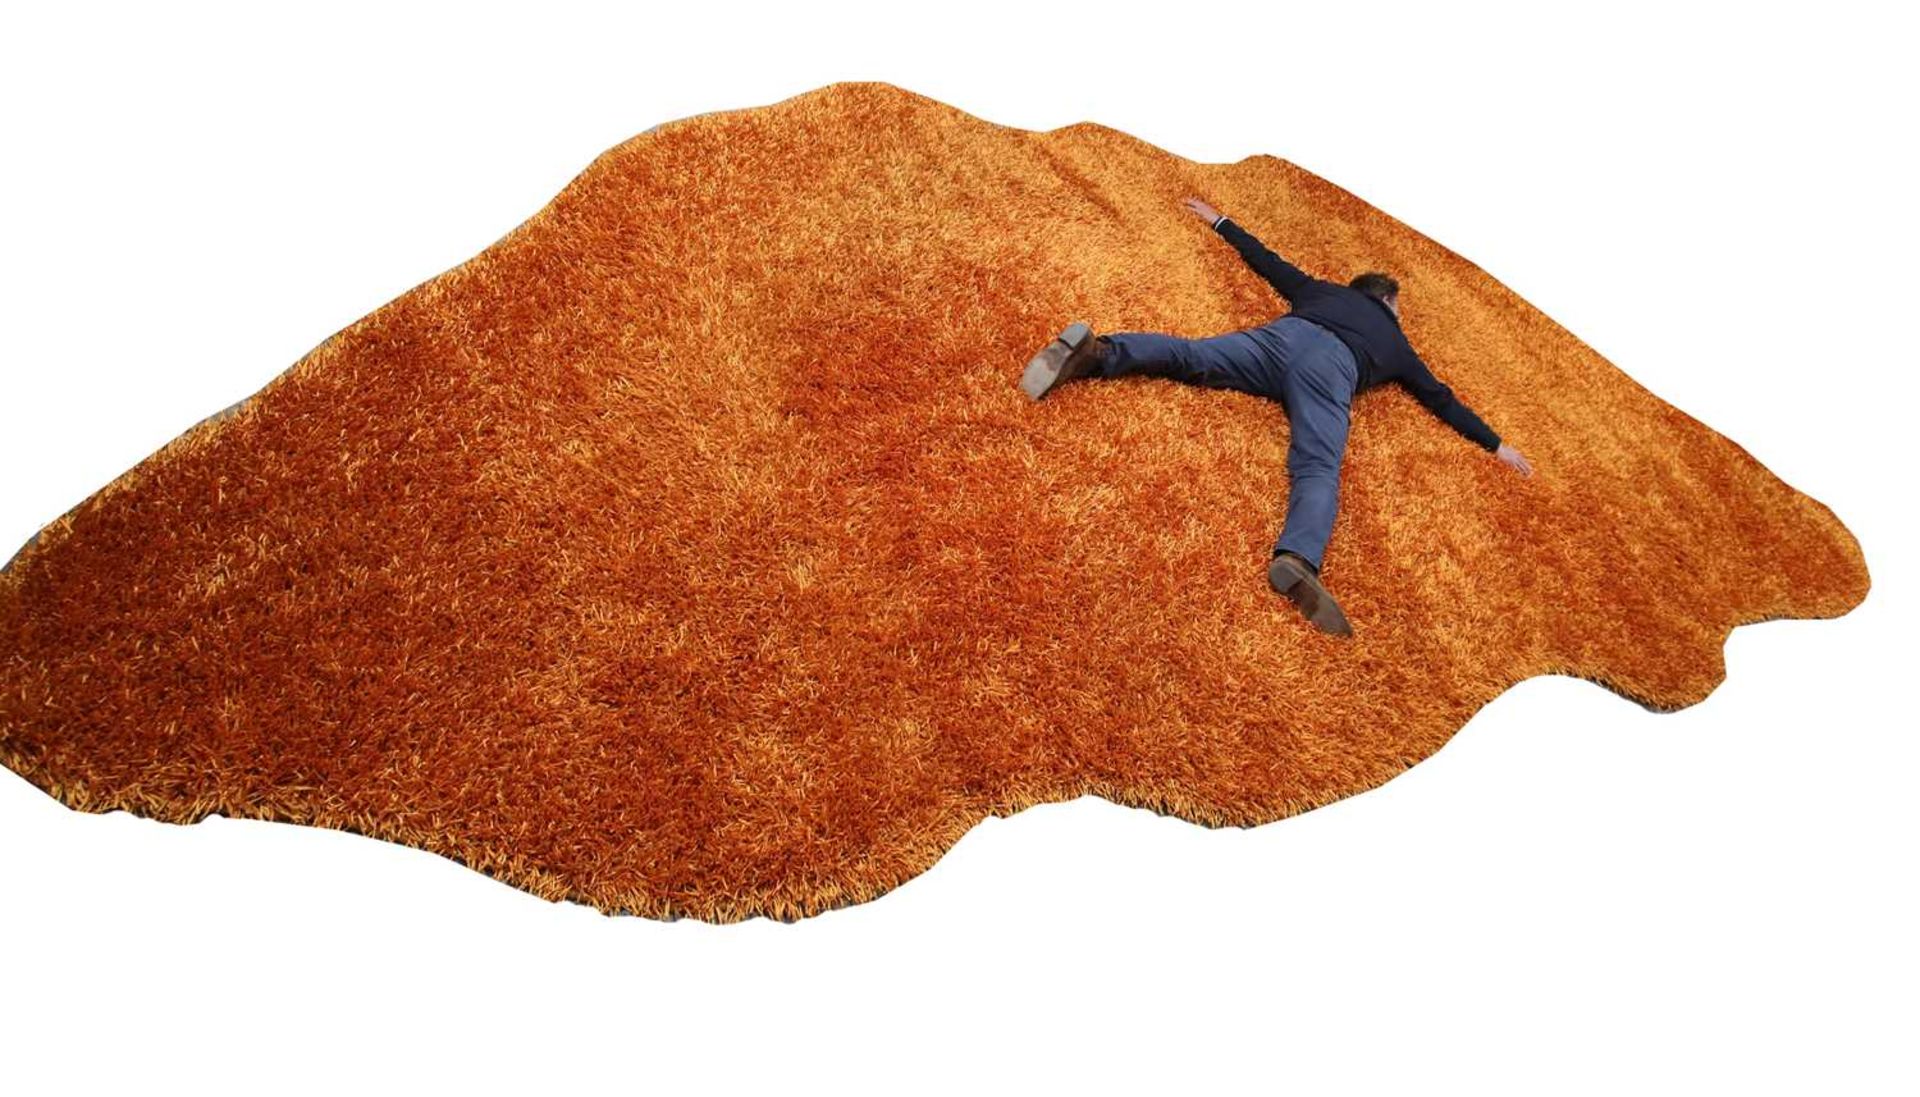 An Alton-Brooke ginger thick shag pile rug,